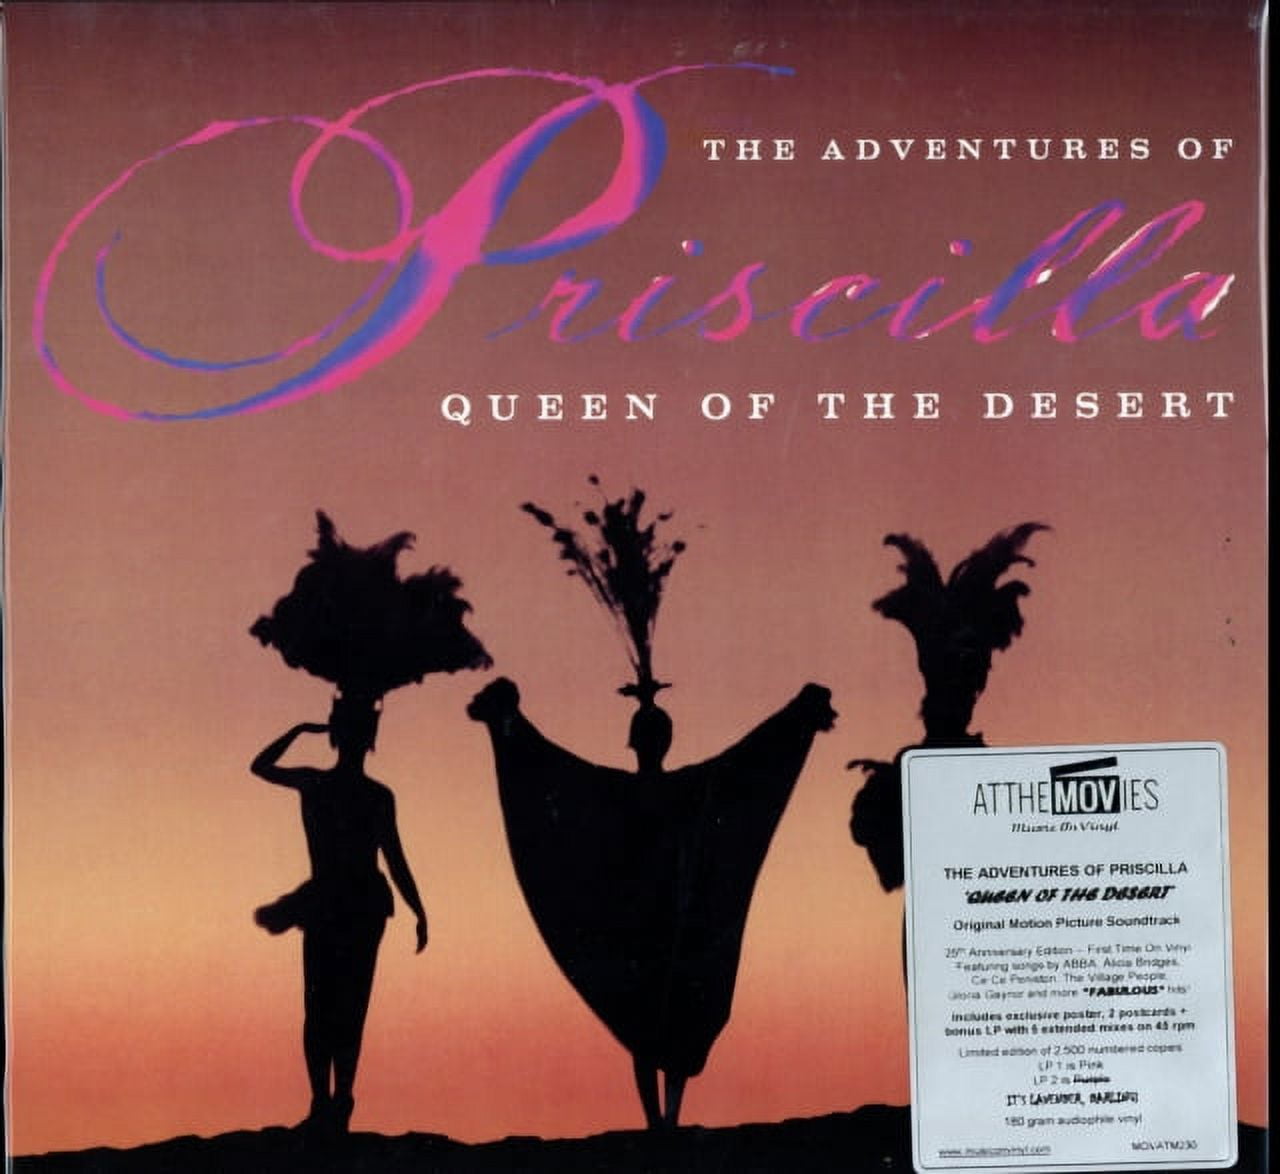 The Adventures of Priscilla, Queen of the Desert - Publicity still